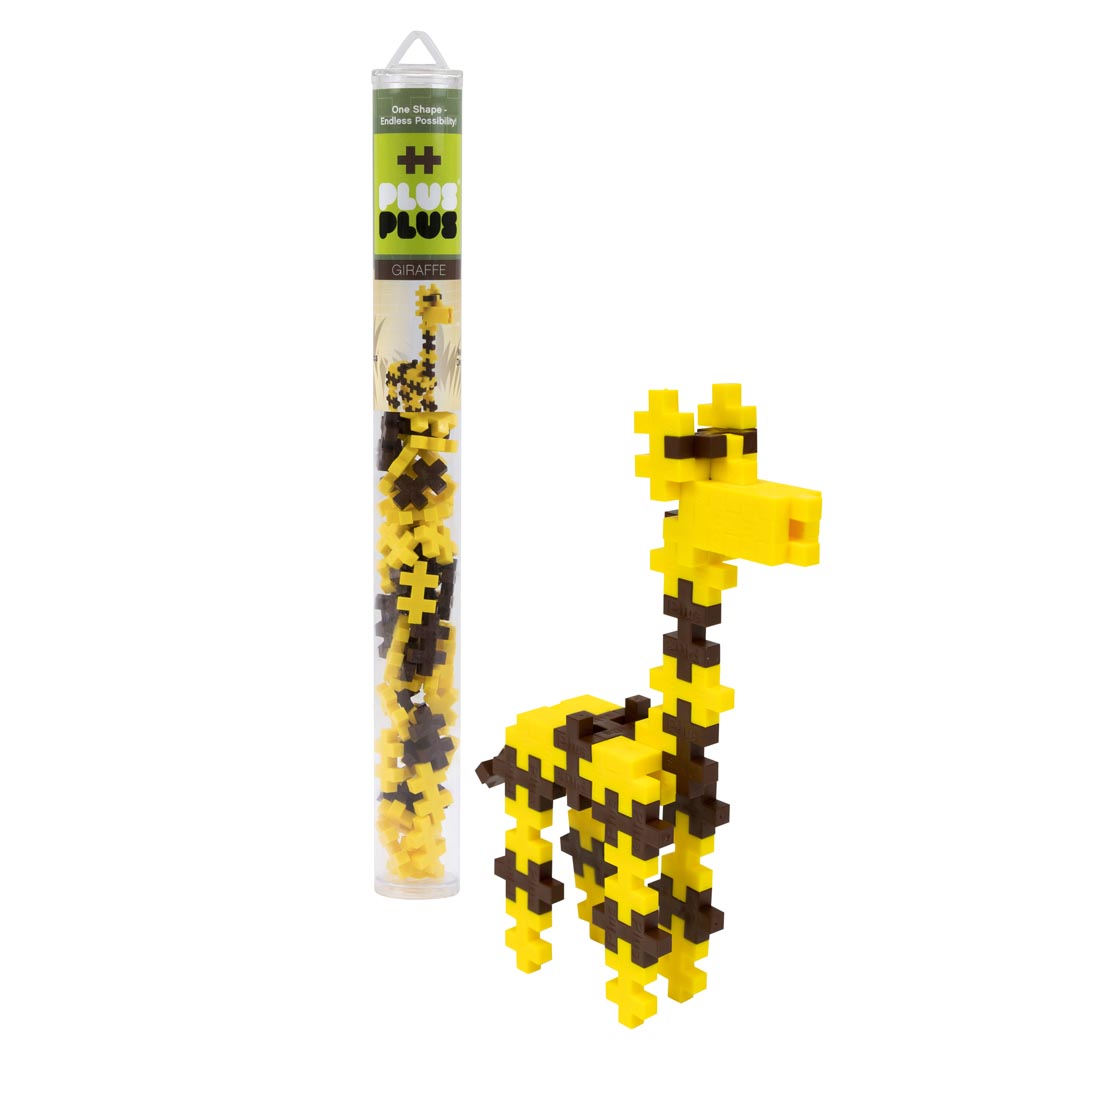 Plus-Plus 70-Piece Giraffe Tube beside a completed giraffe